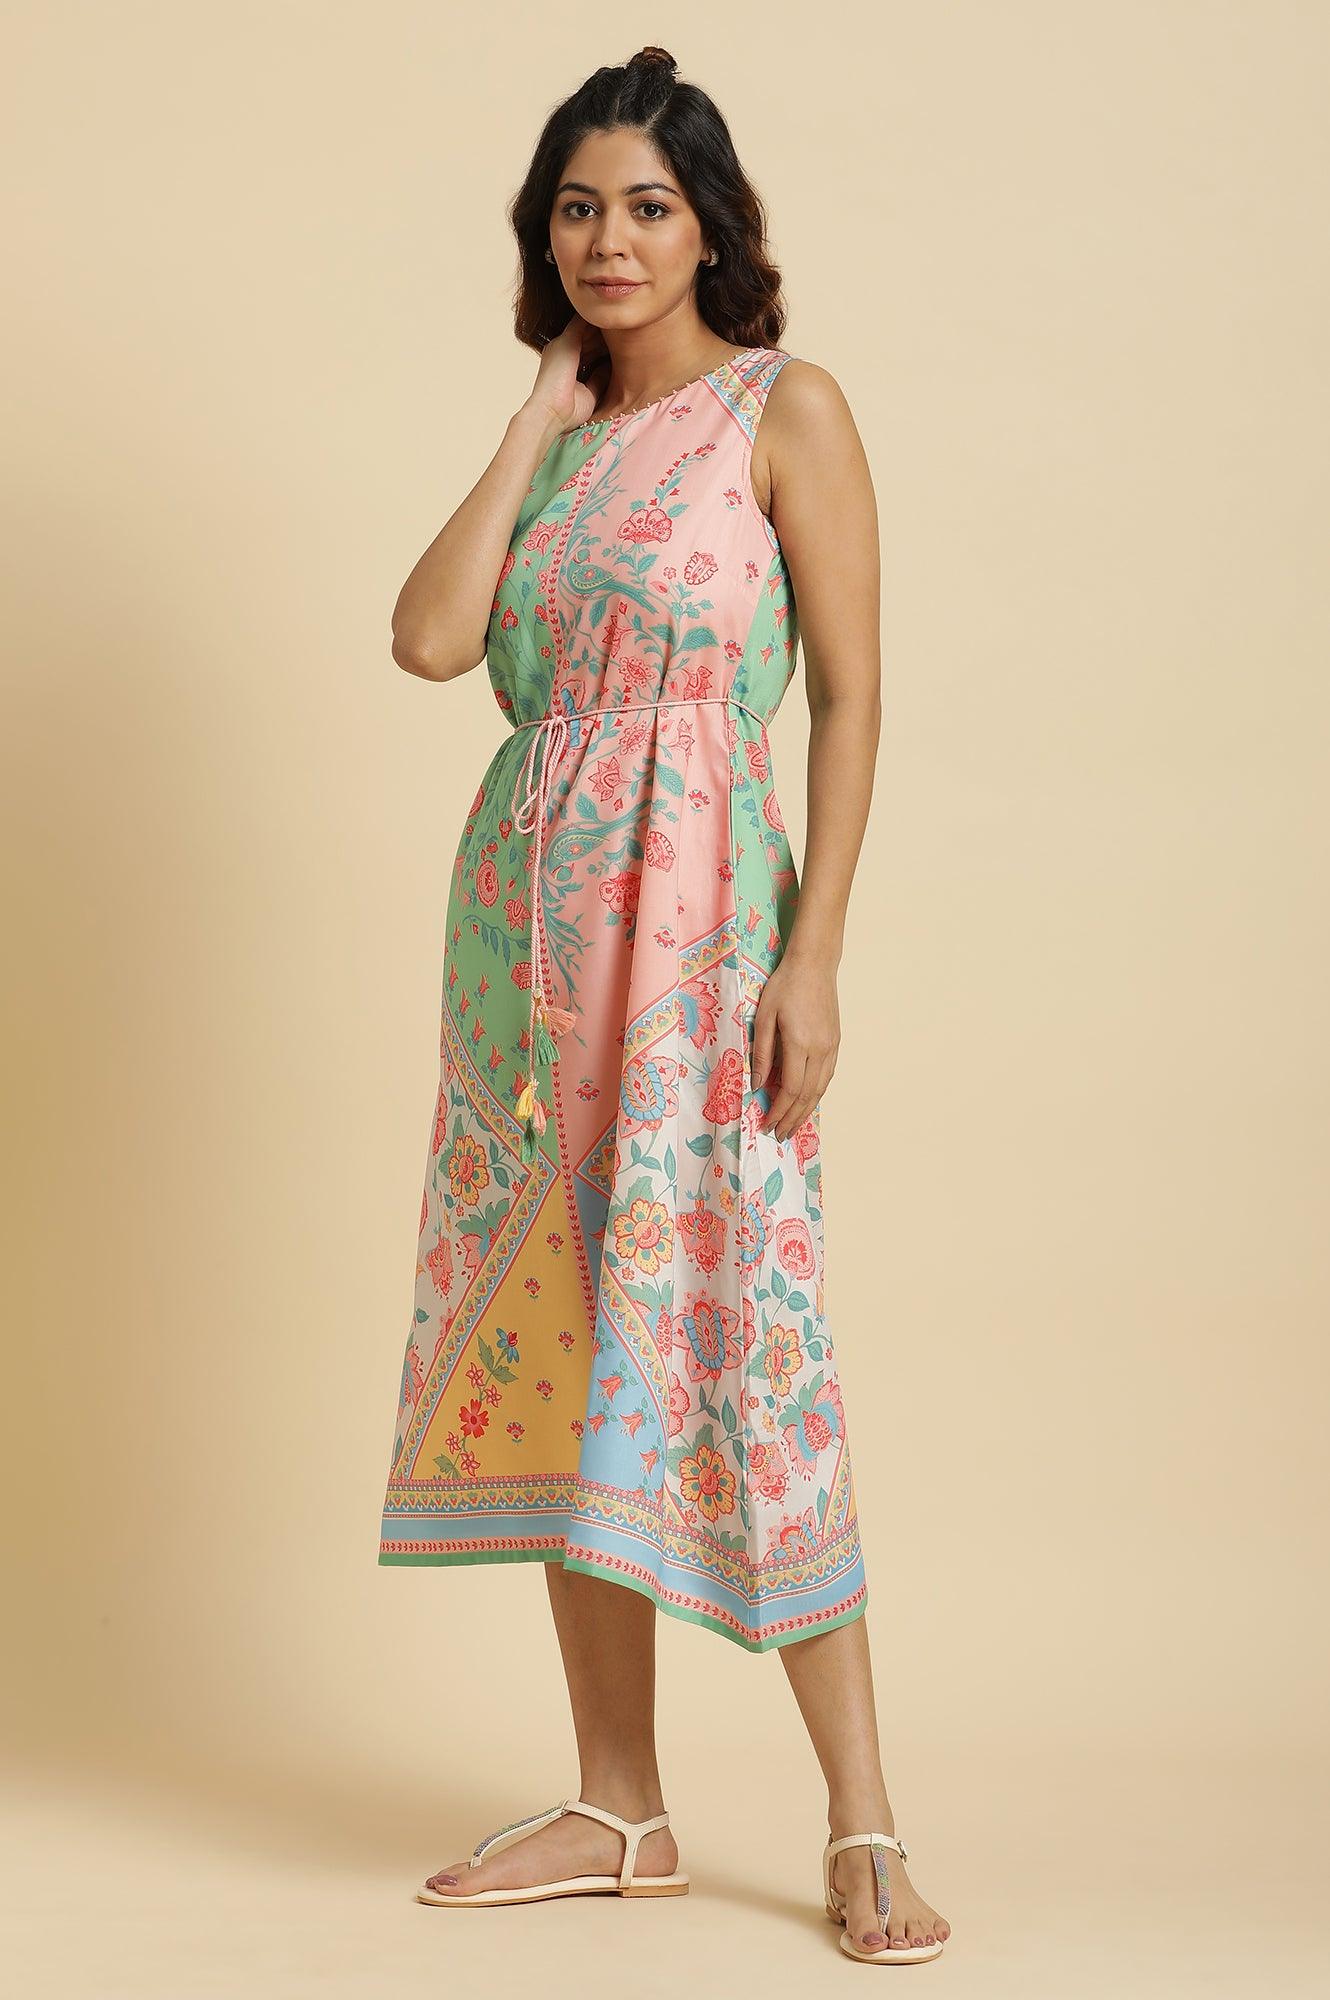 Multi-Coloured Floral Printed Sleeveless Dress - wforwoman